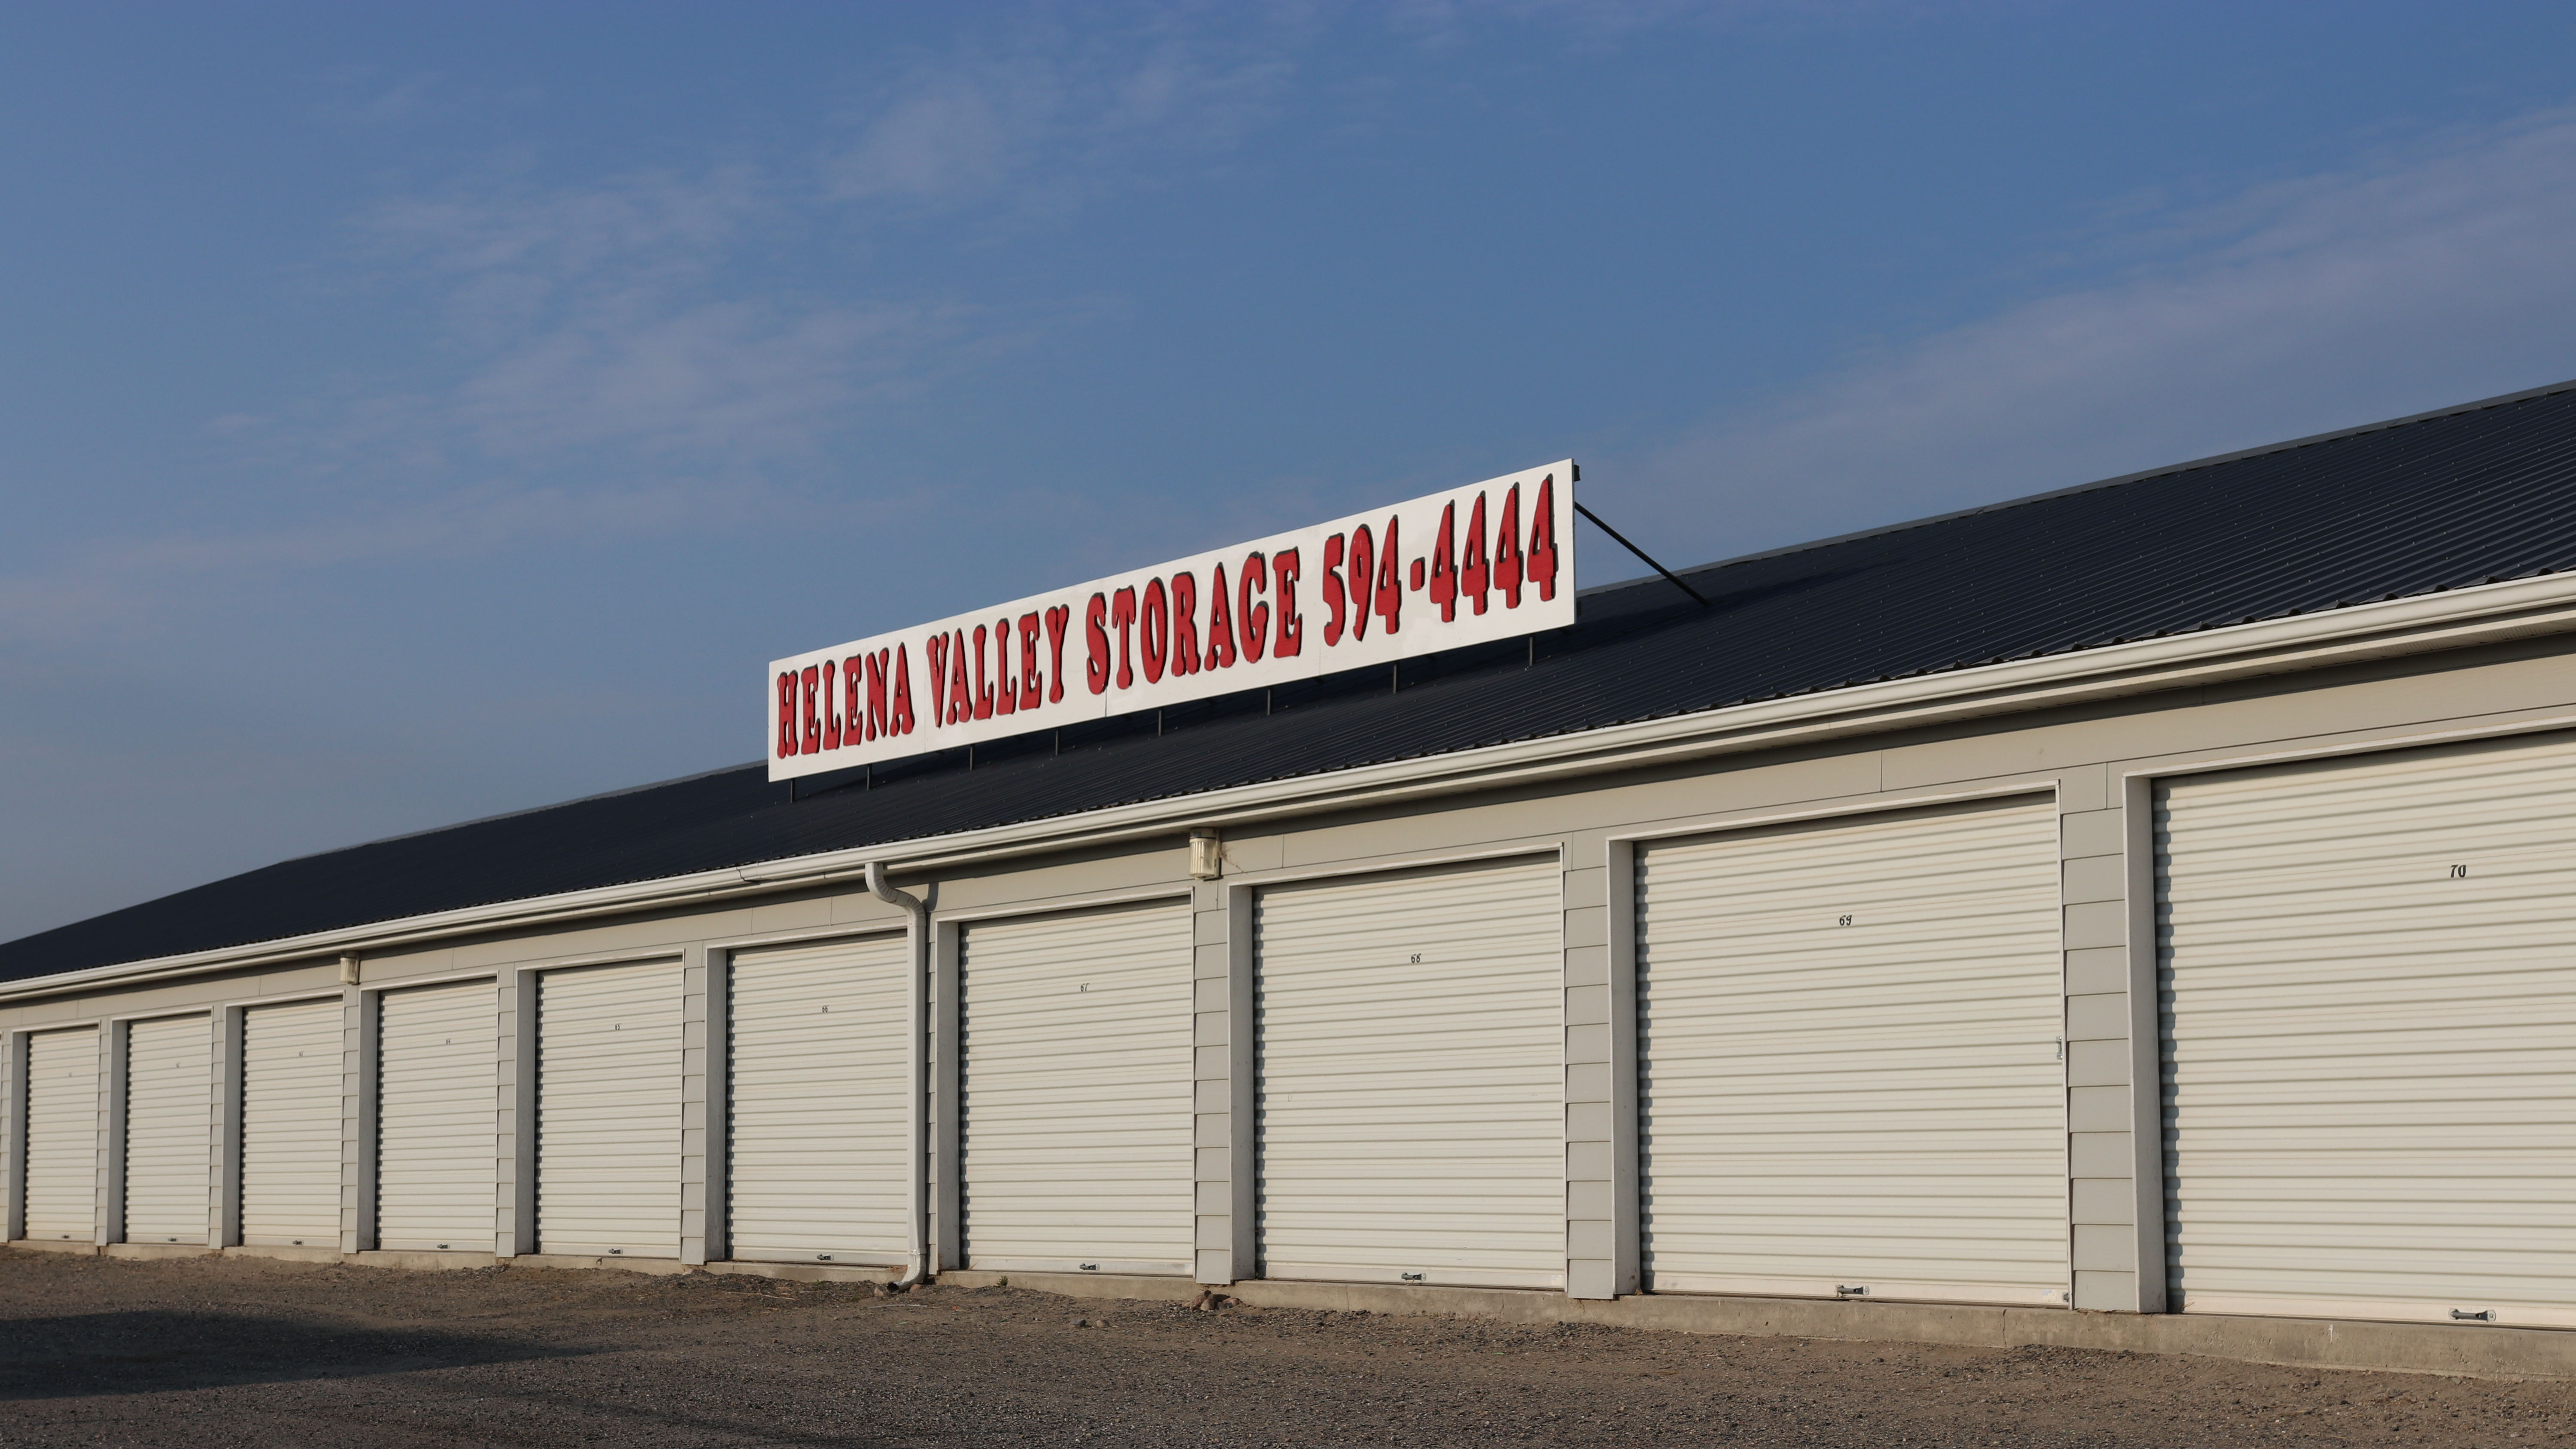 Extetior storage units with Helena Storage sign on building